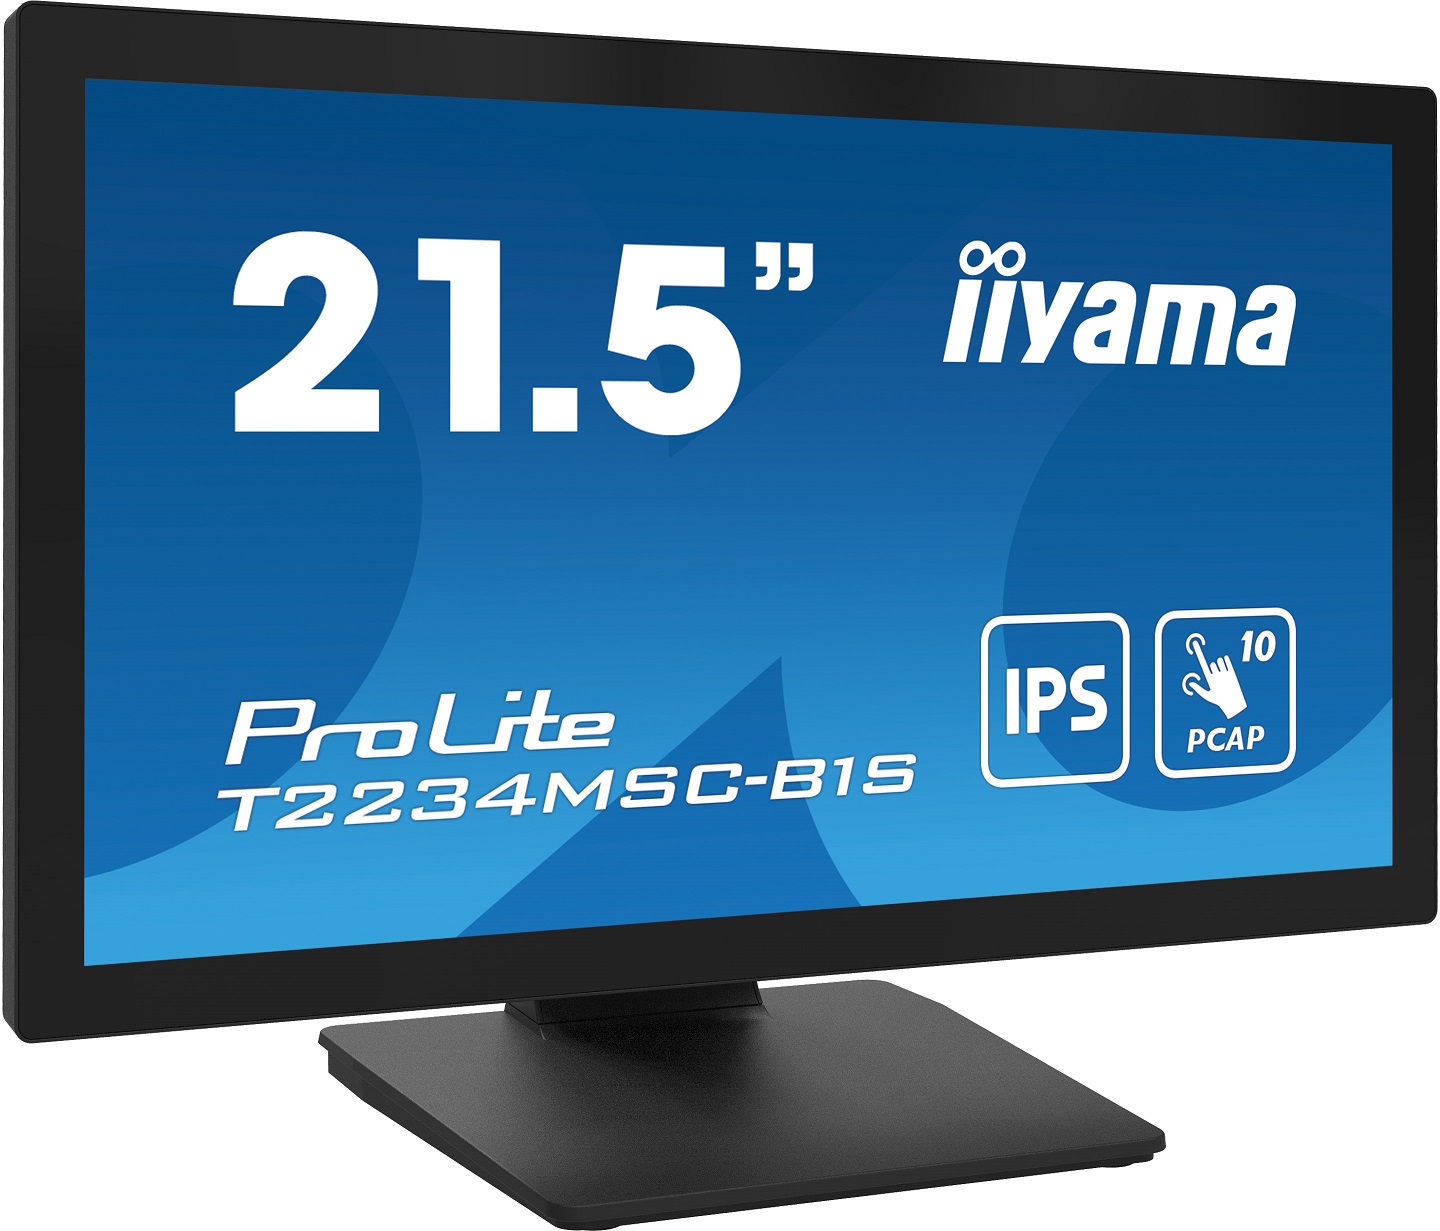 22" LCD iiyama T2234MSC-B1S:PCAP, 10P, IPS, FHD, HDMI 